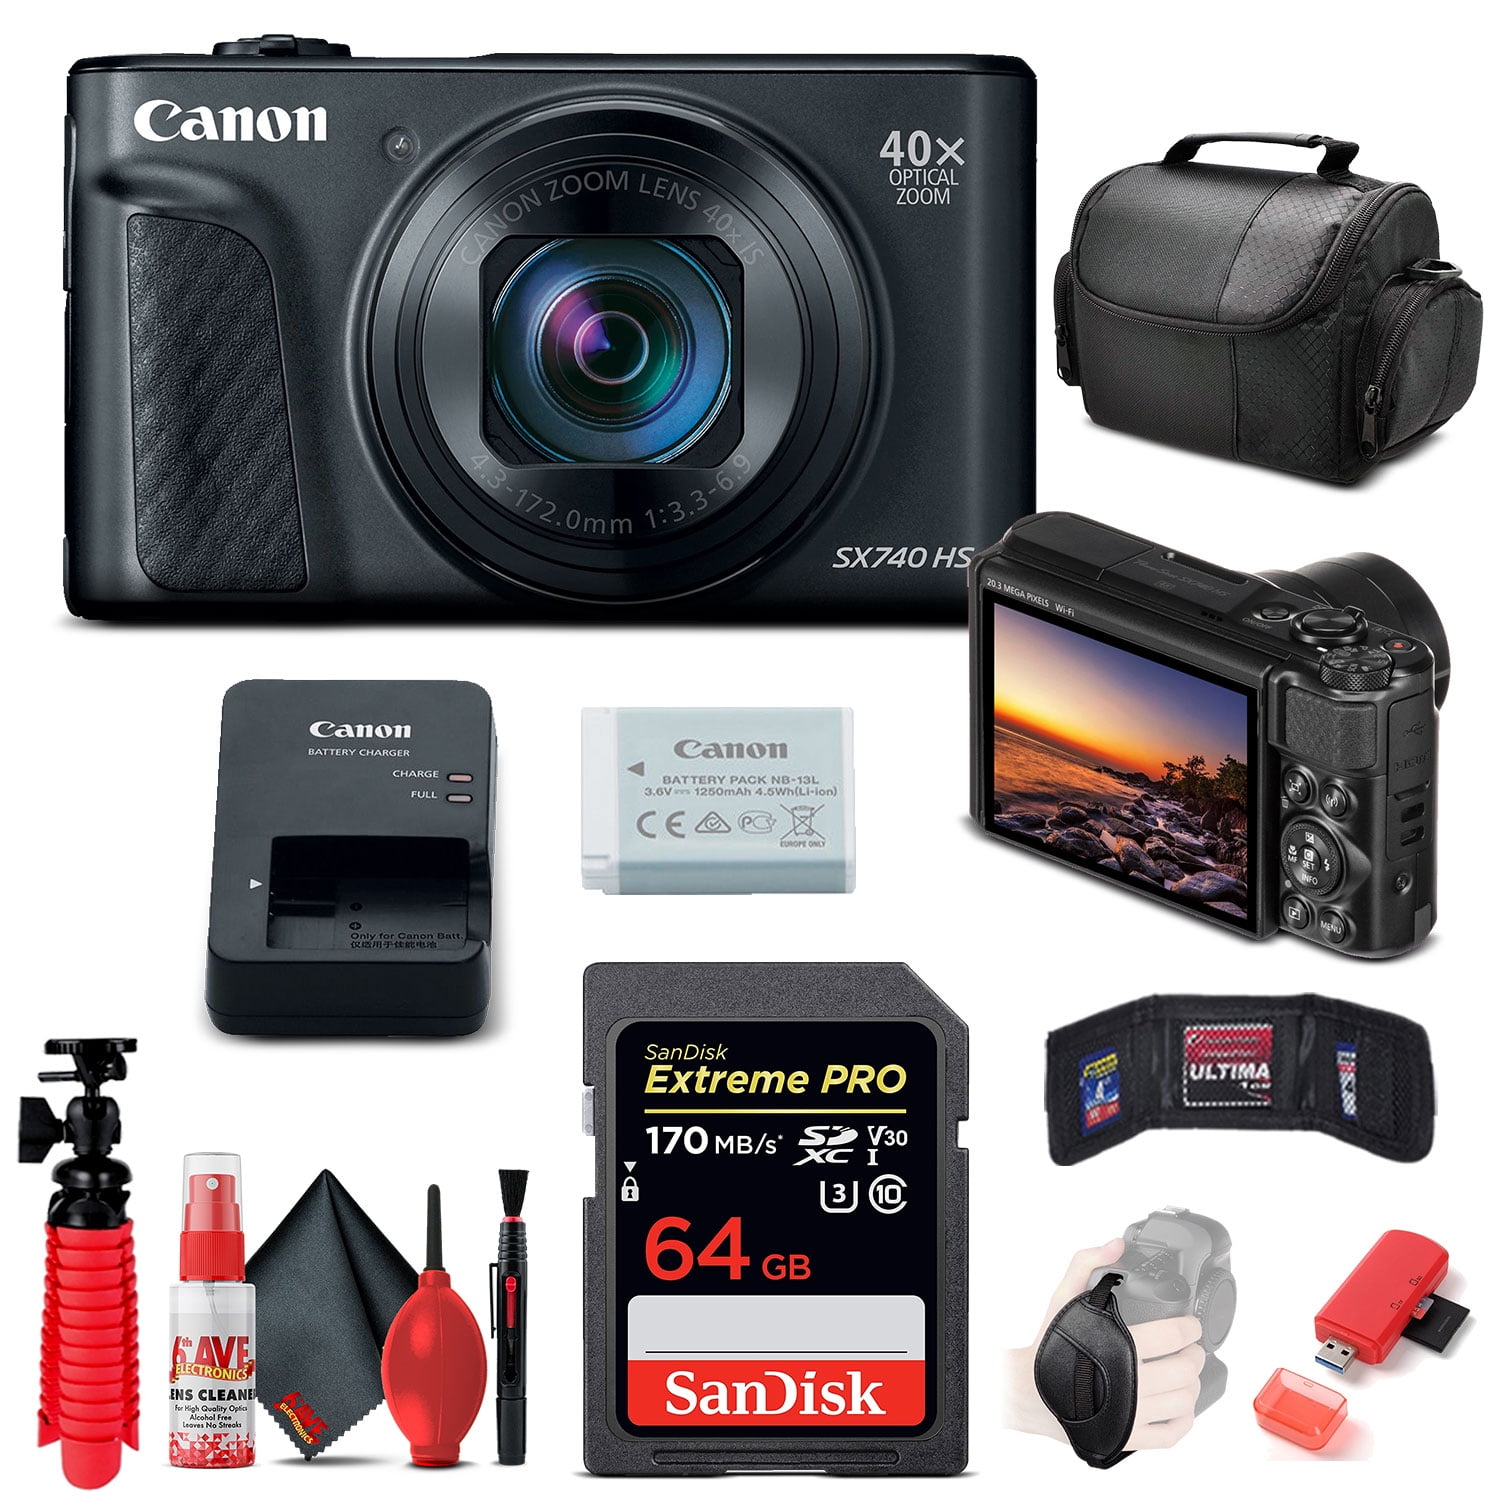 Canon PowerShot Digital Camera [G7 X Mark III] with Wi-Fi & NFC, LCD Screen  and 4K Video - Black (Renewed)